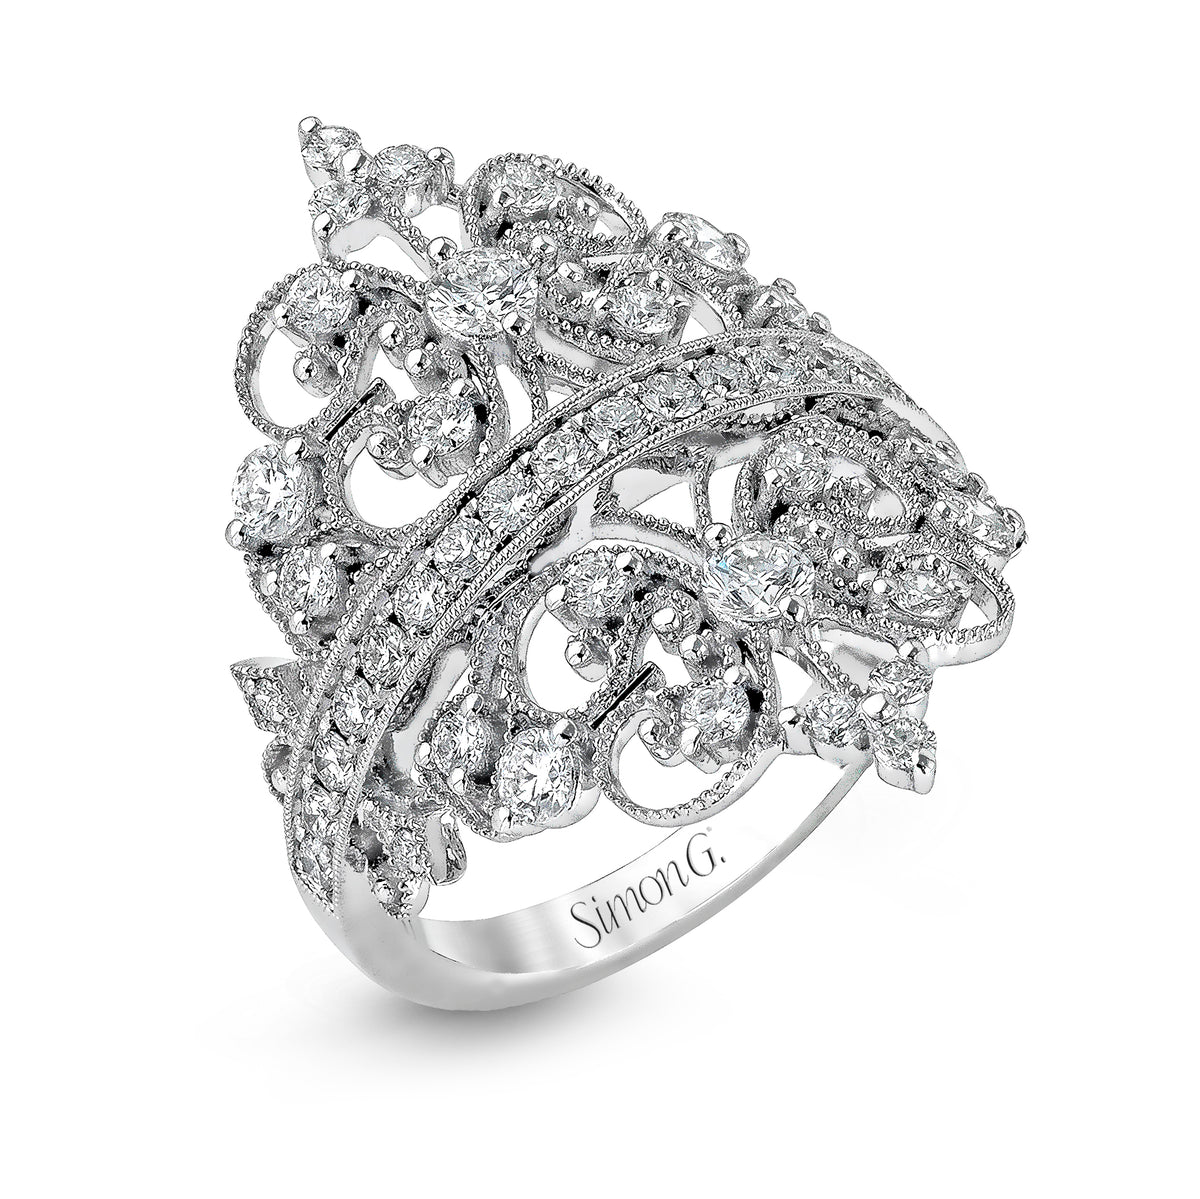 Simon G 18K White Gold Crown Design Ring